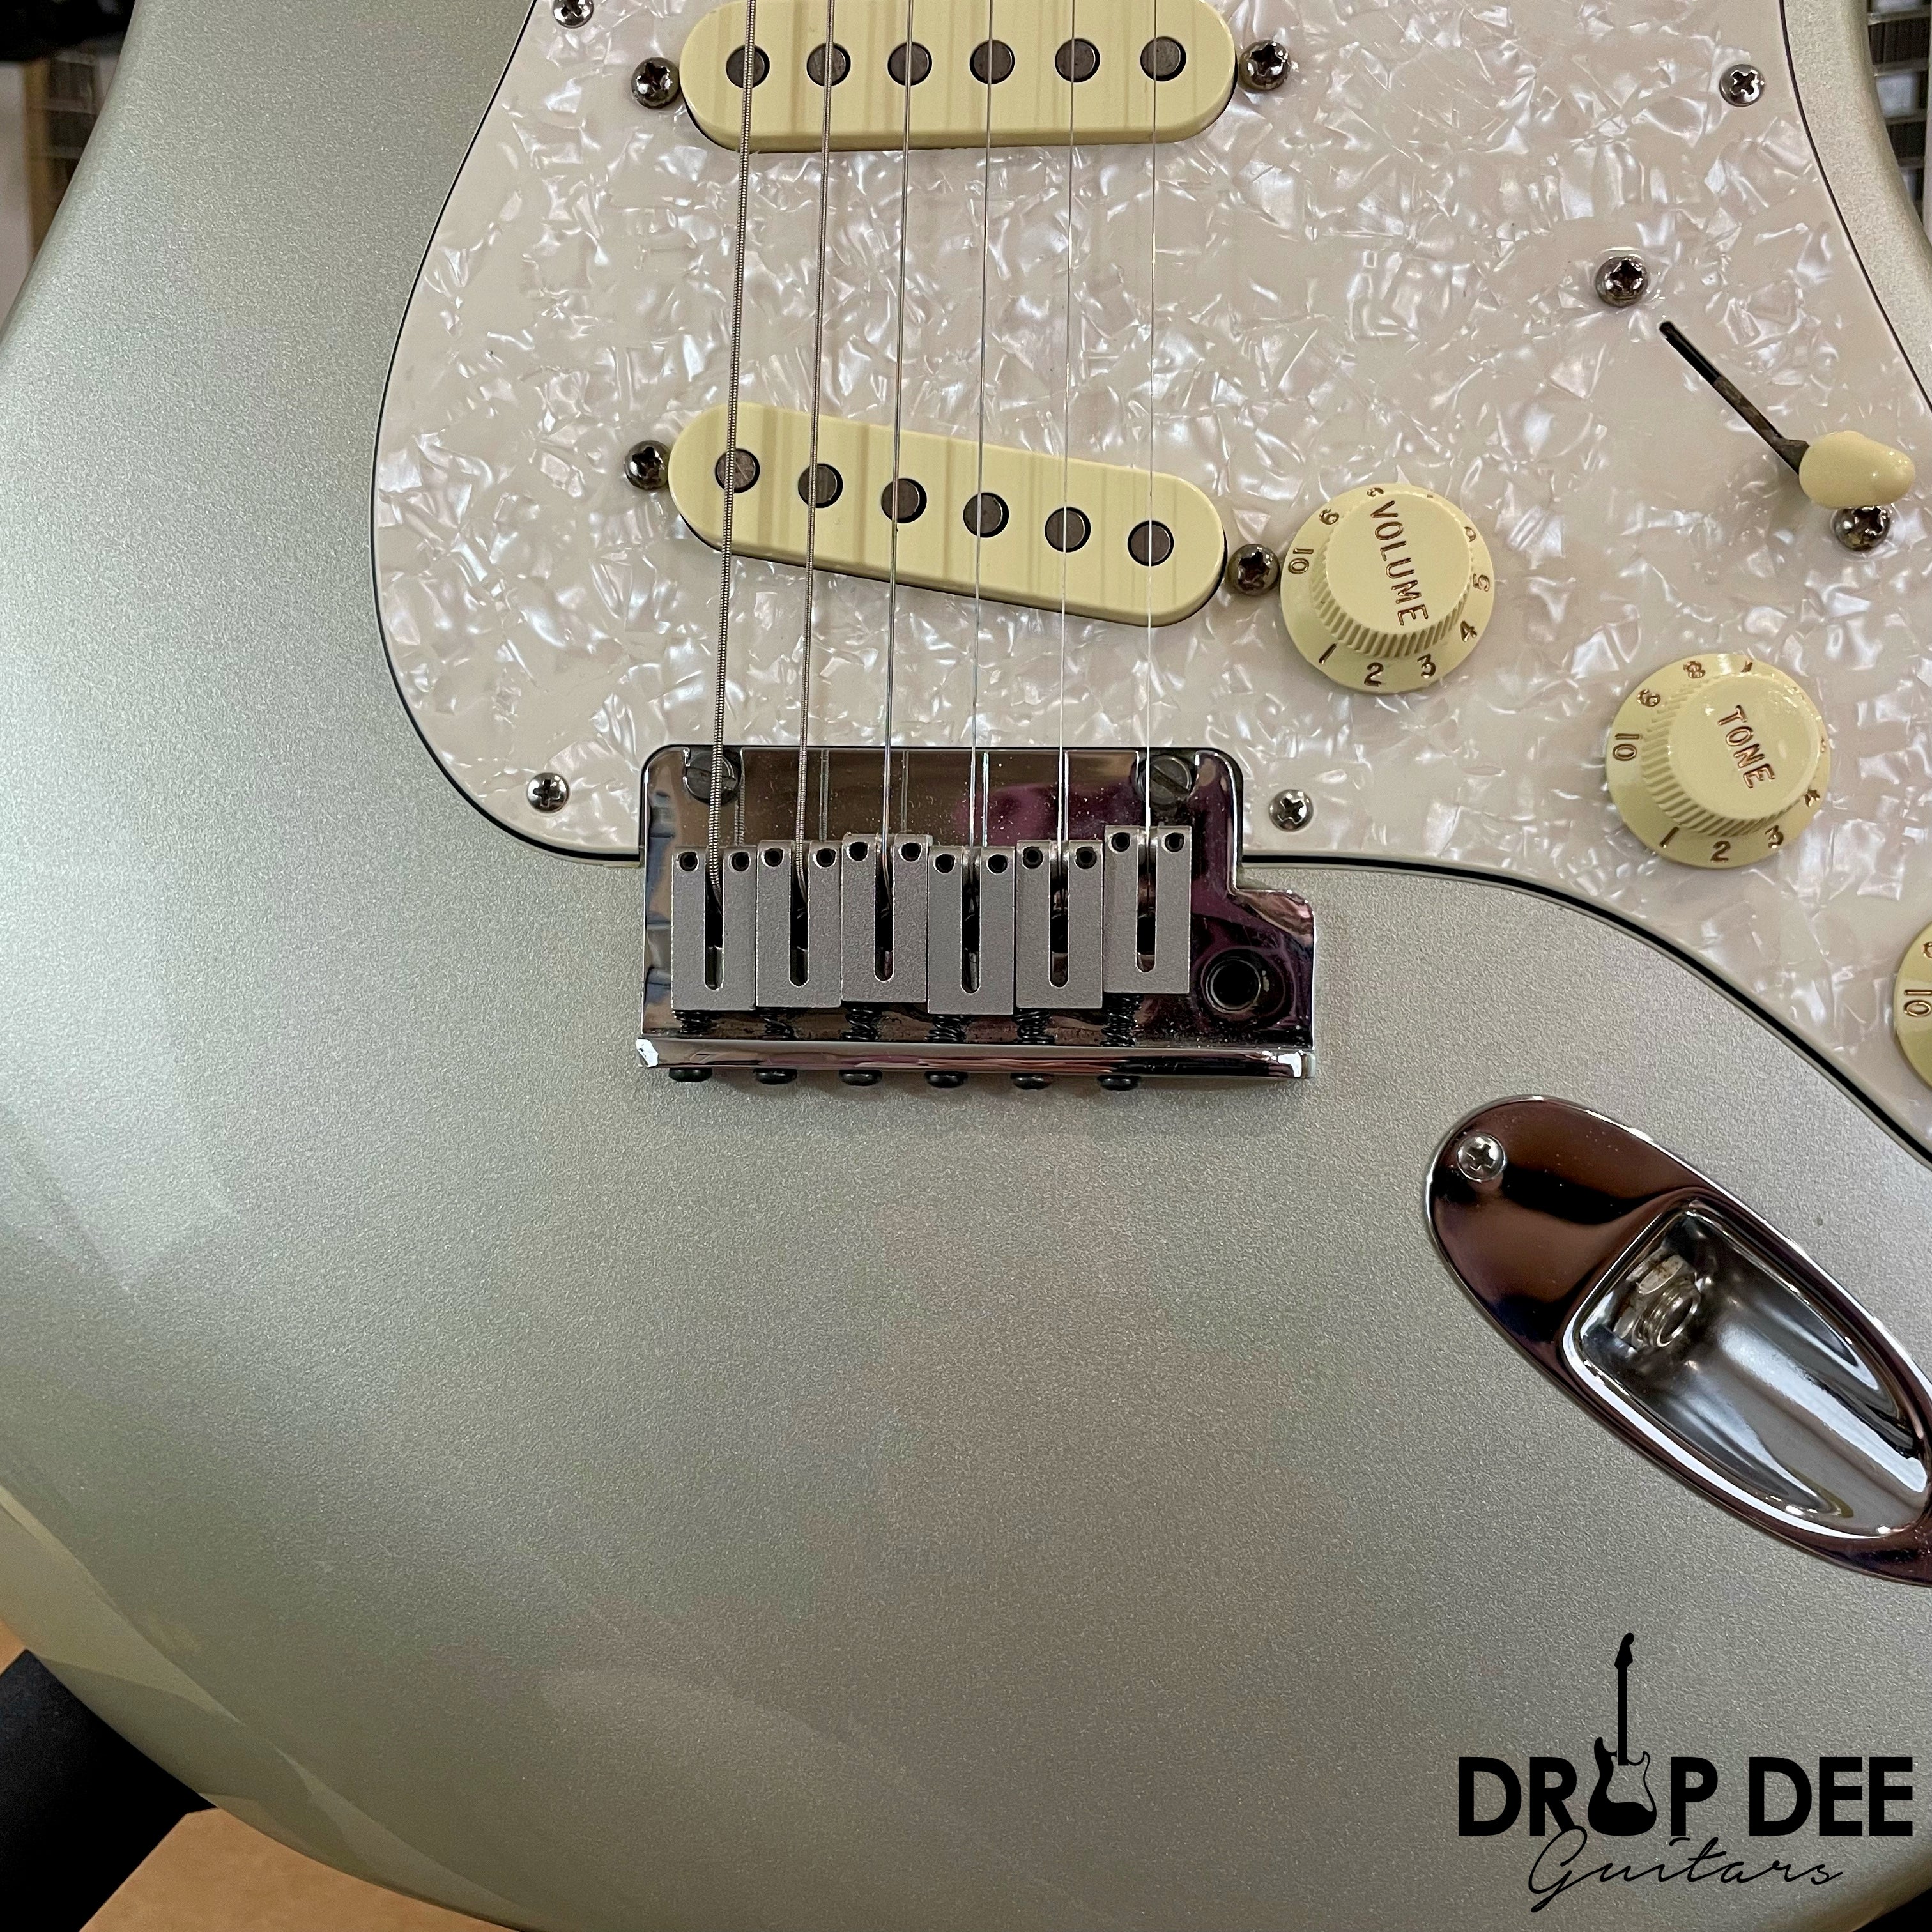 Fender American Standard Stratocaster Electric Guitar w/ Case